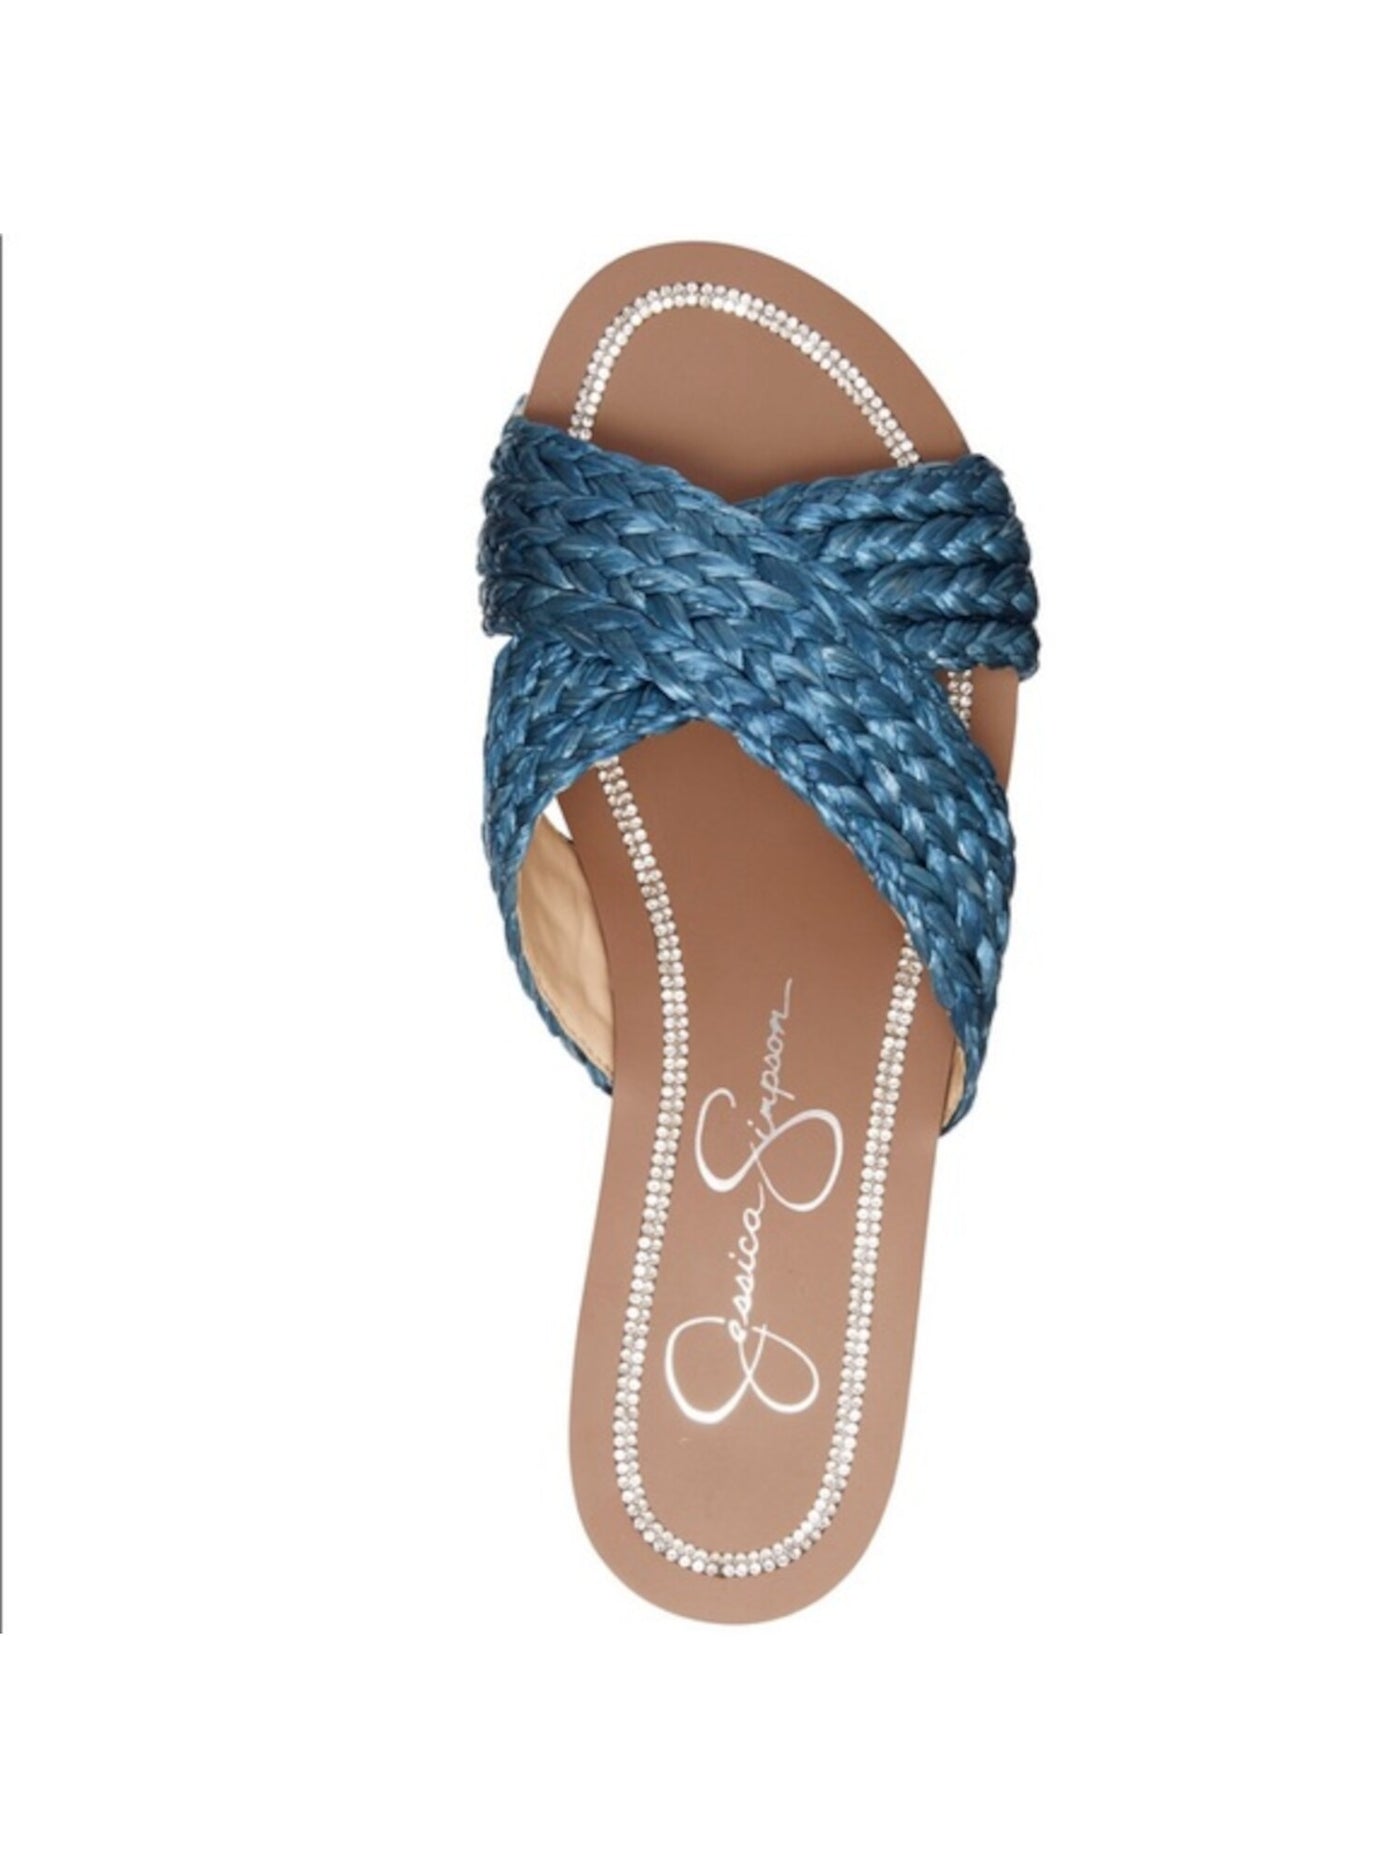 JESSICA SIMPSON Womens Blue Braided Crisscross Straps Rhinestone Braided Elaney Almond Toe Block Heel Slip On Slide Sandals Shoes 5.5 M